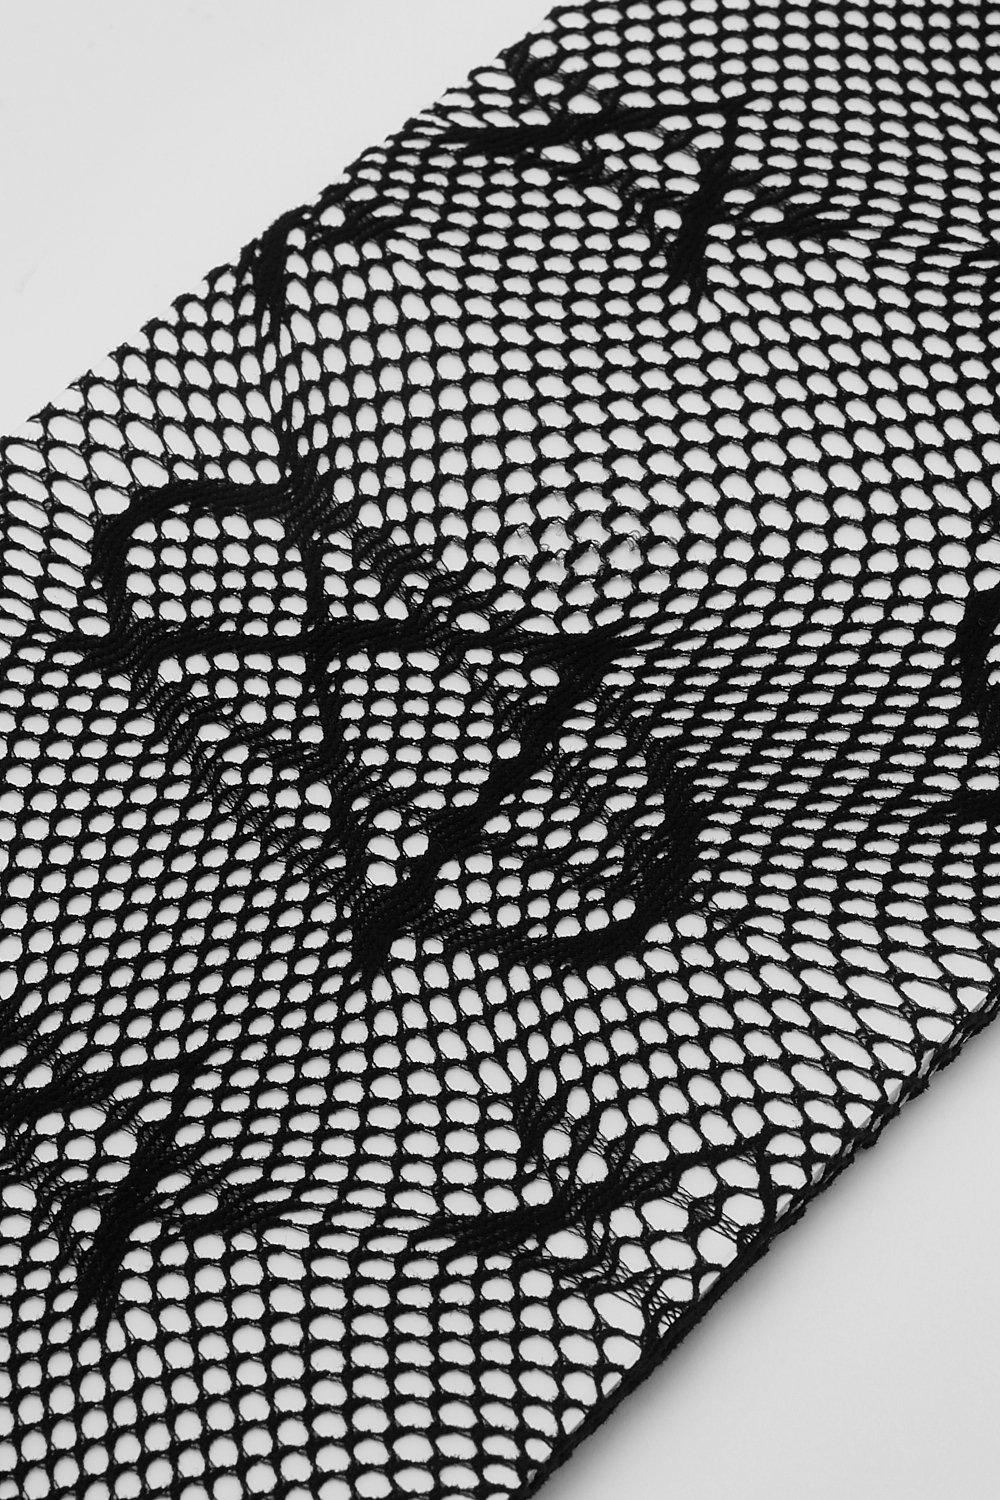 fishnet tights MOON celestial pattern white mesh LUNAE rave